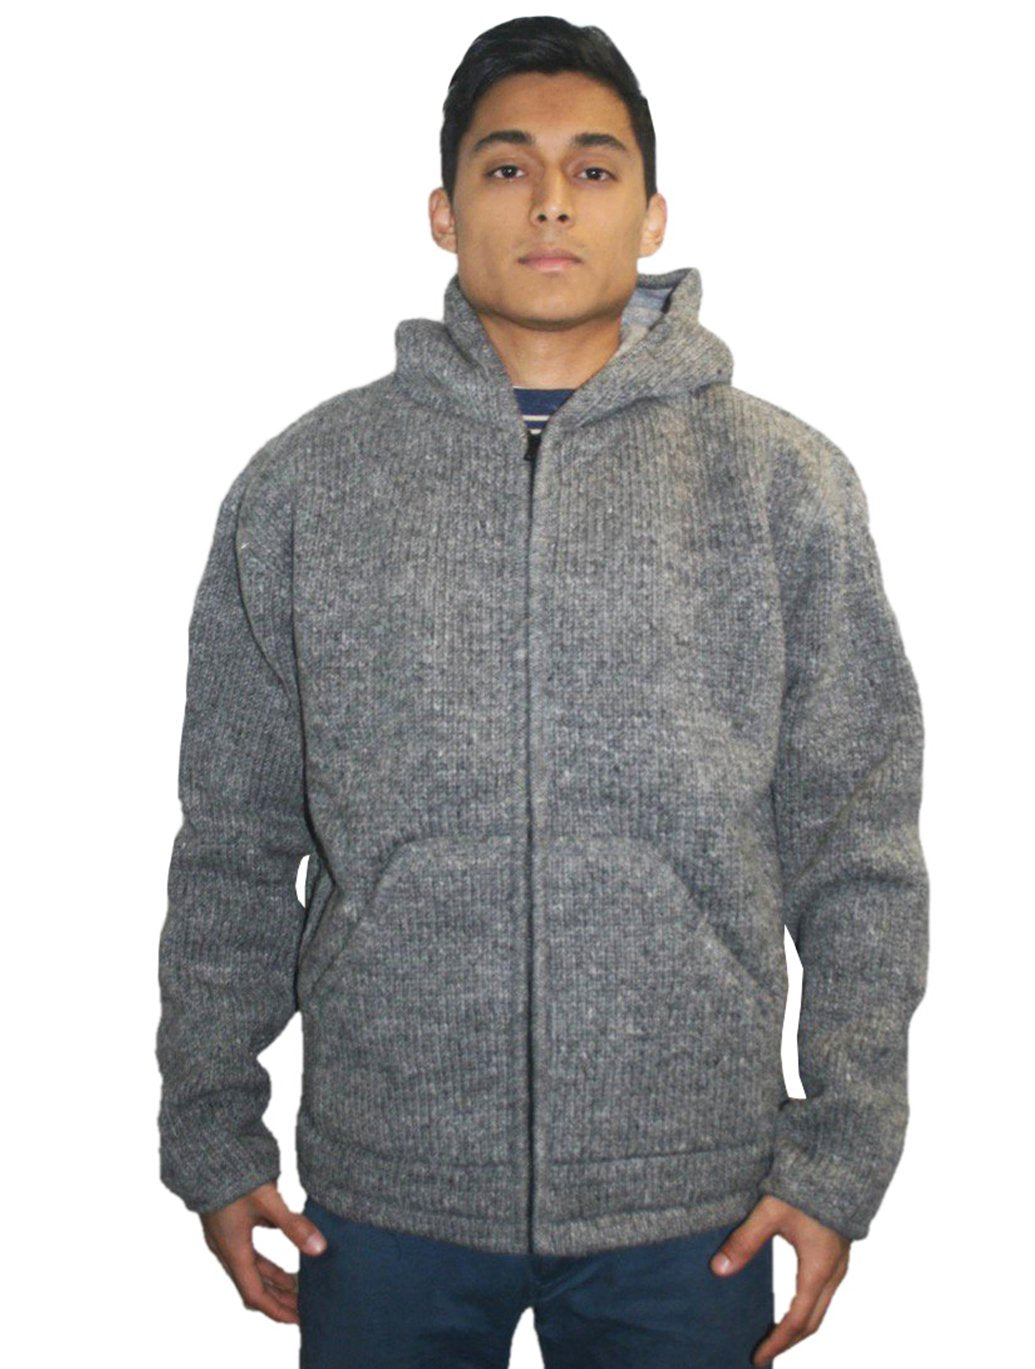 himalayan wool jacket